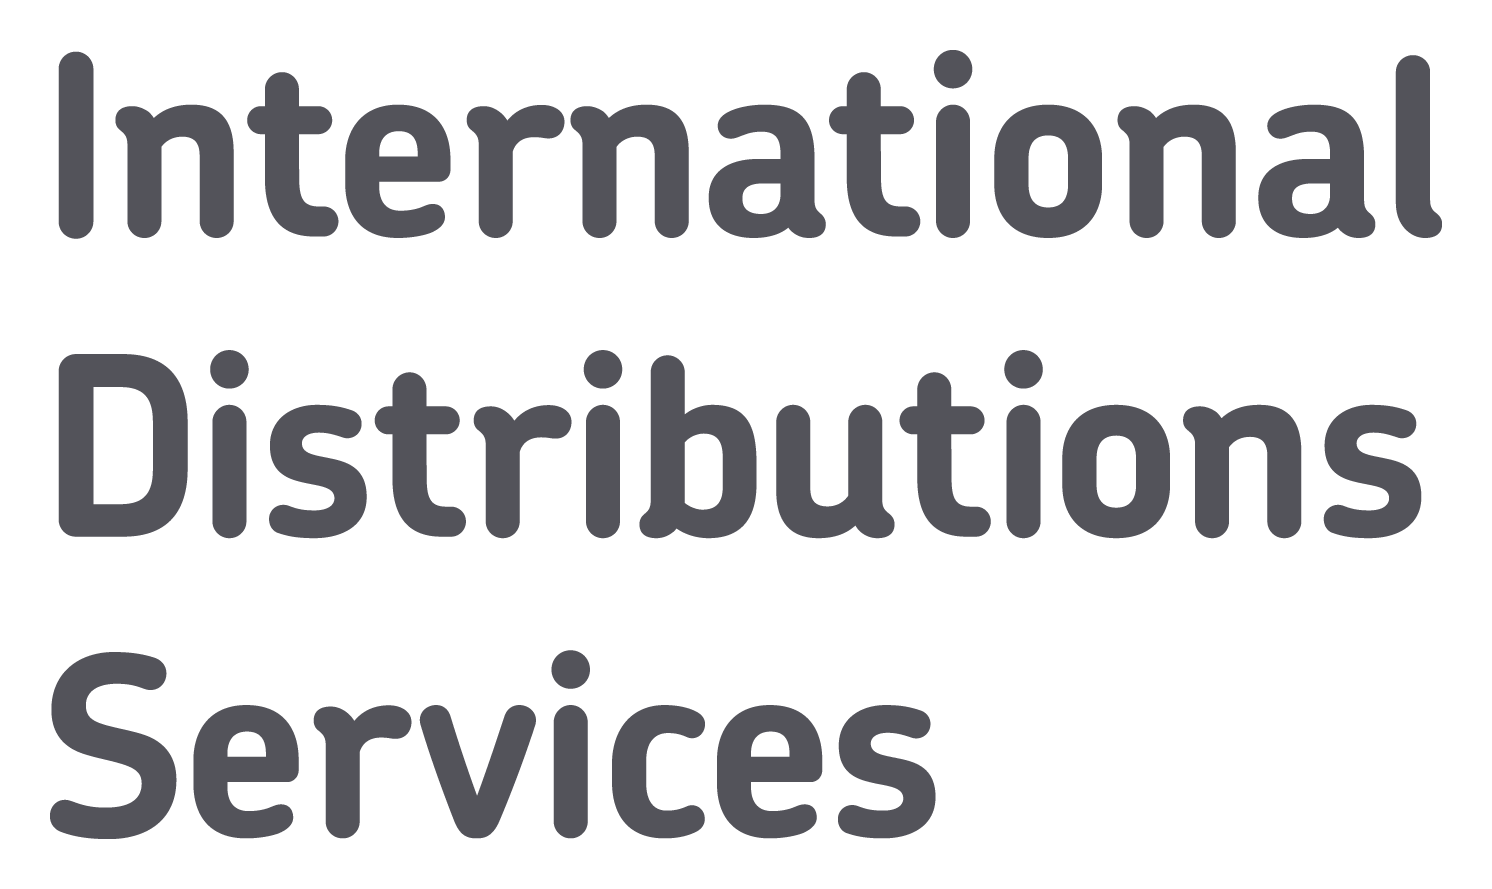 INTERNATIONAL DISTRIBUTIONS SERVICES PLC (ROYAL MAIL)